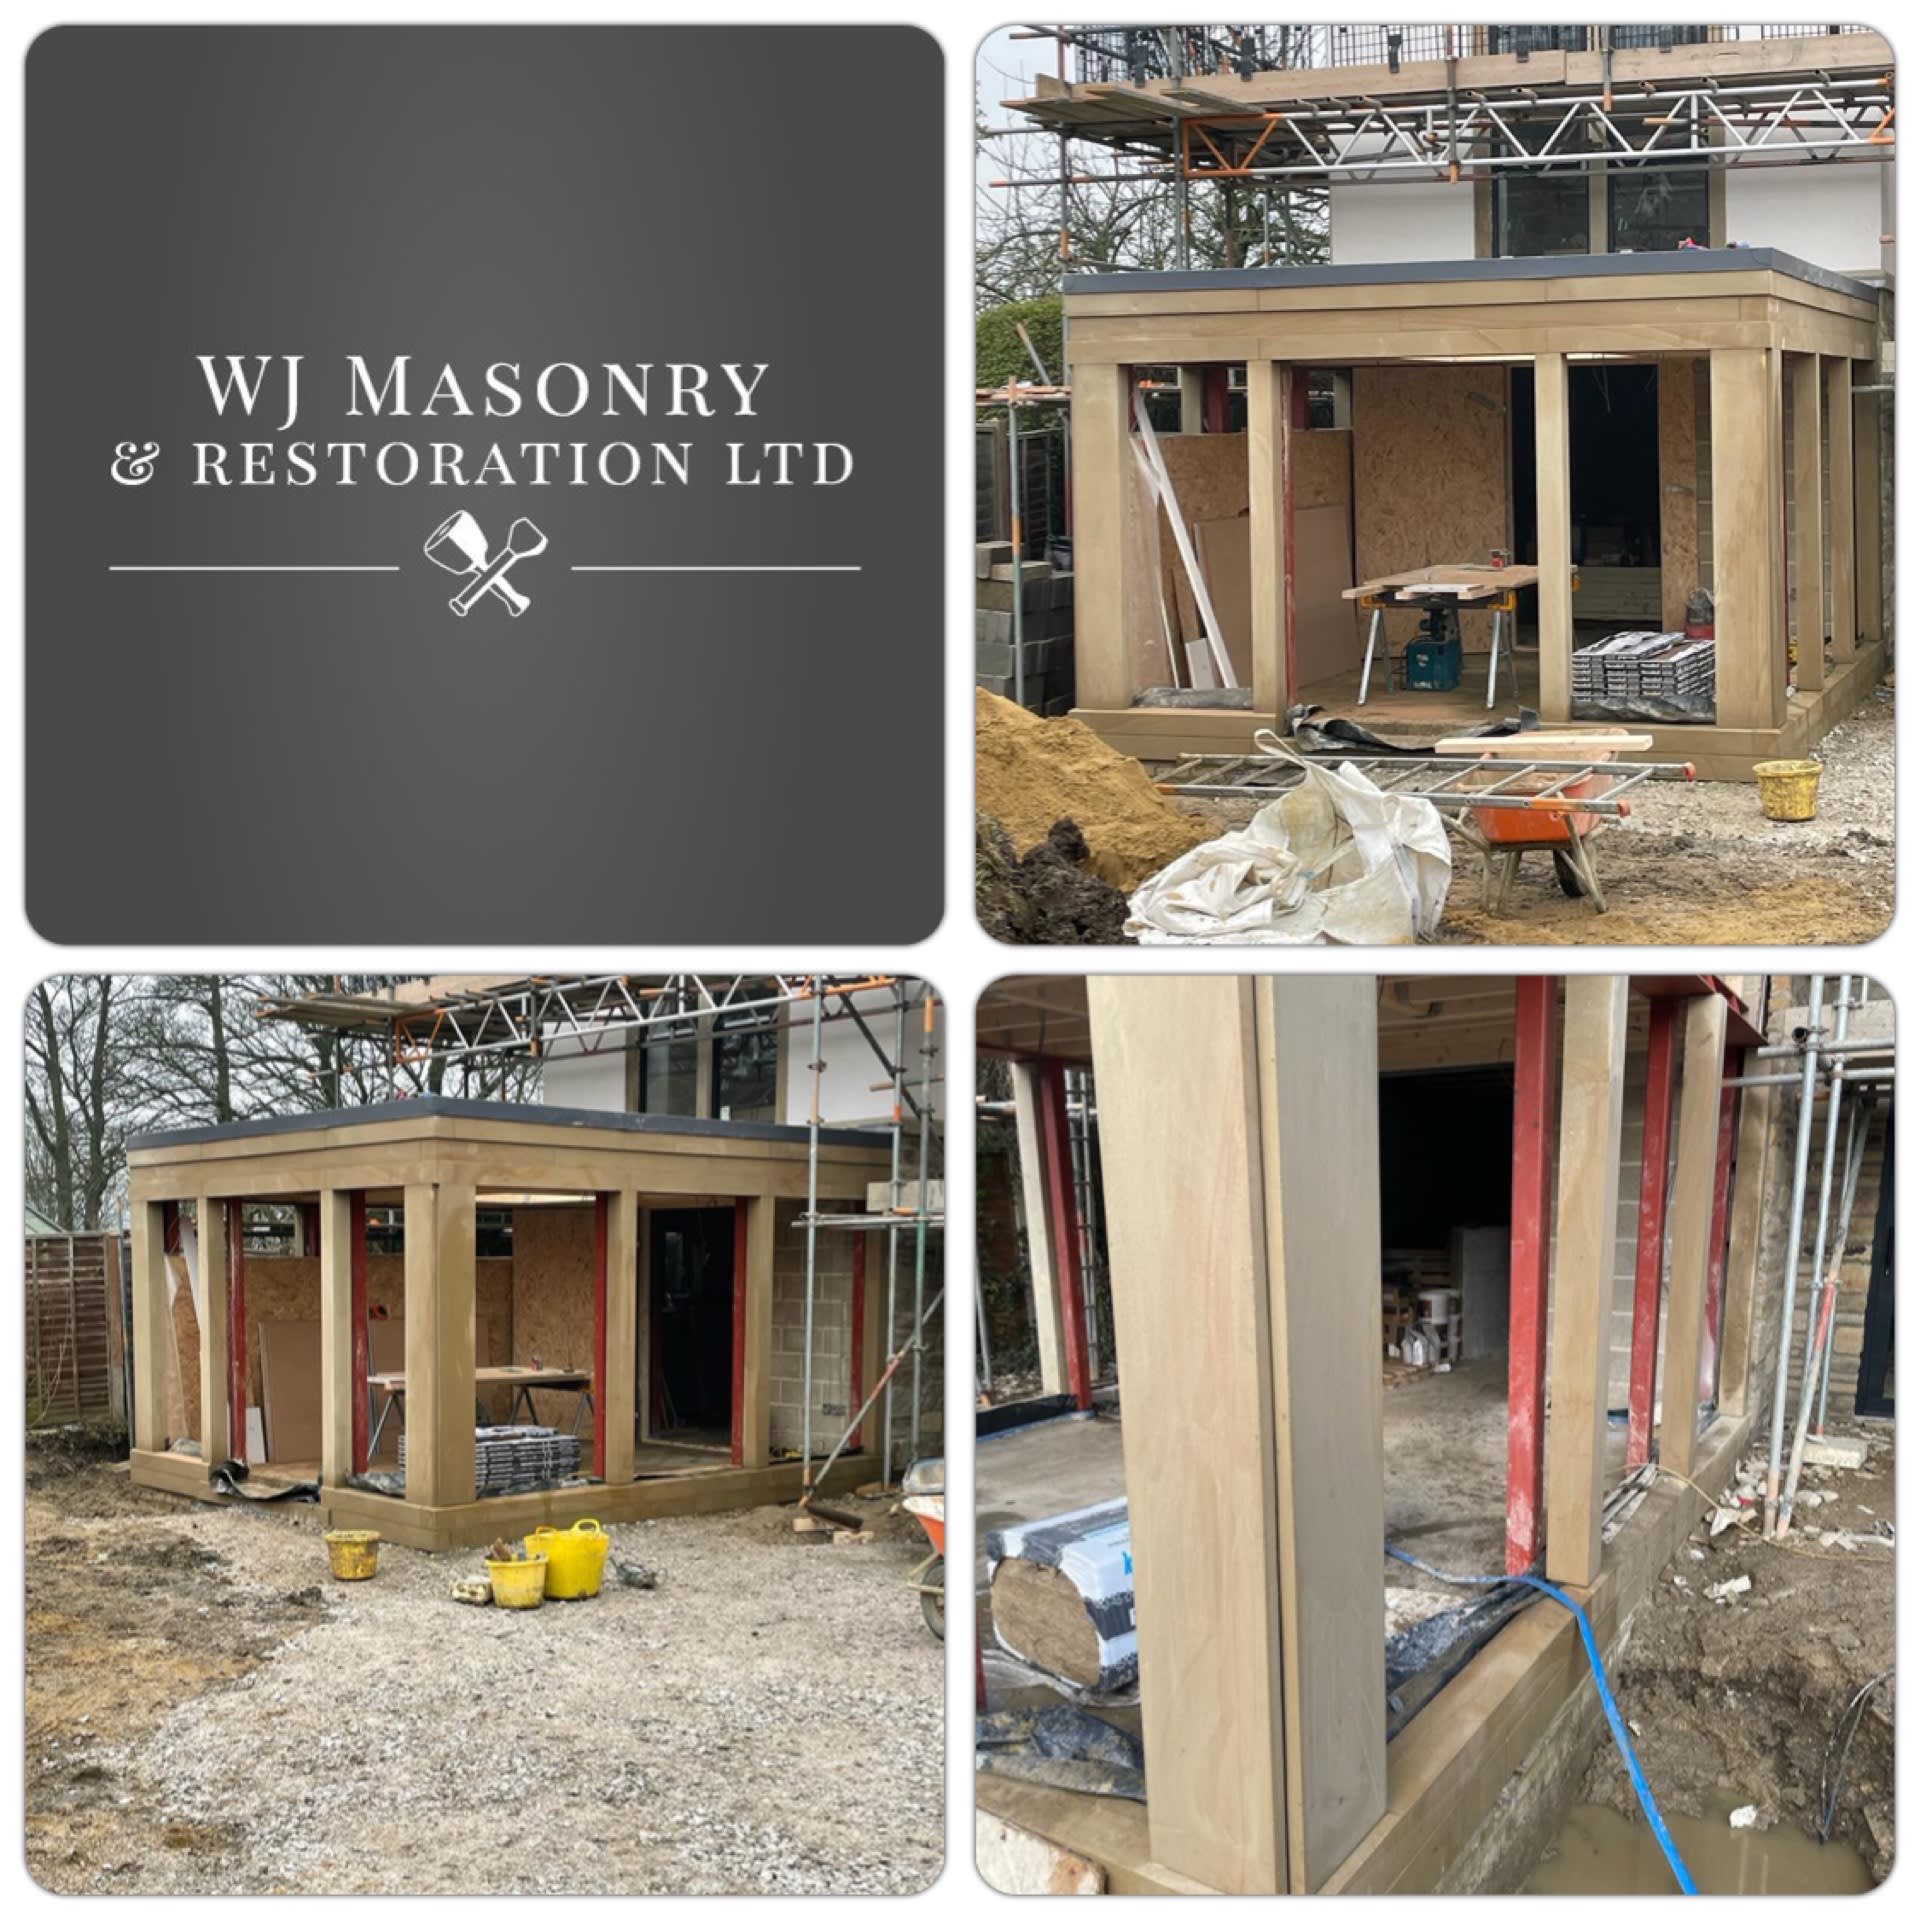 Images WJ Masonry & Restoration Ltd